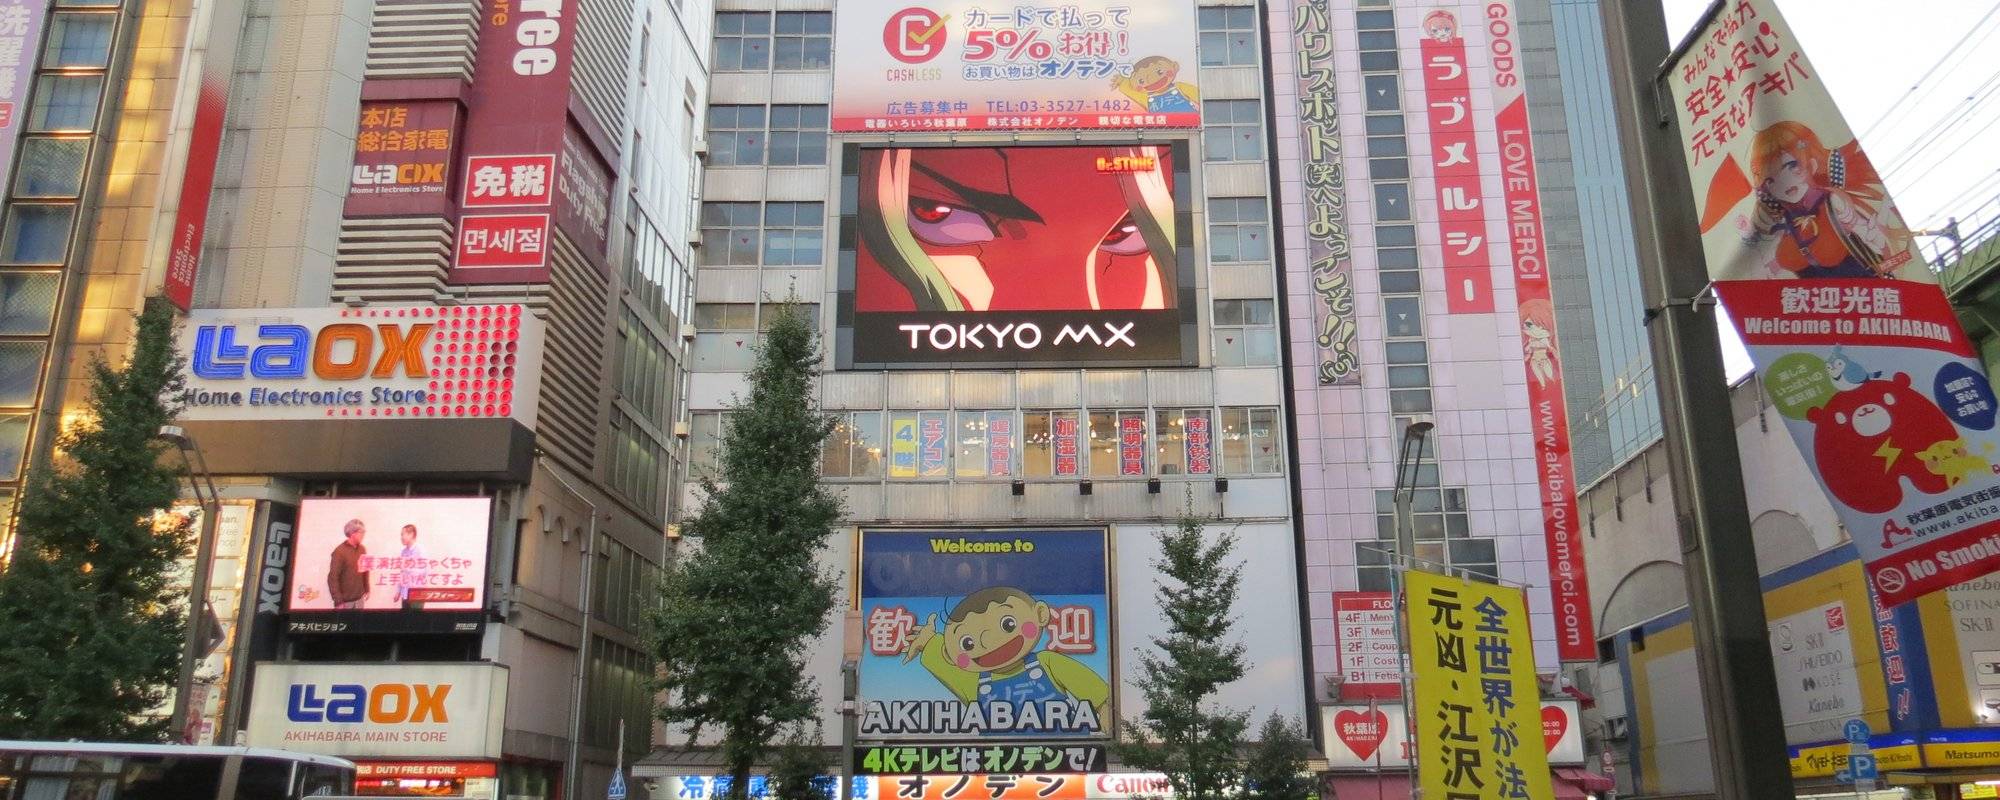 Akihabara - Tokyo's favorite district among fans of manga, anime and computer games.